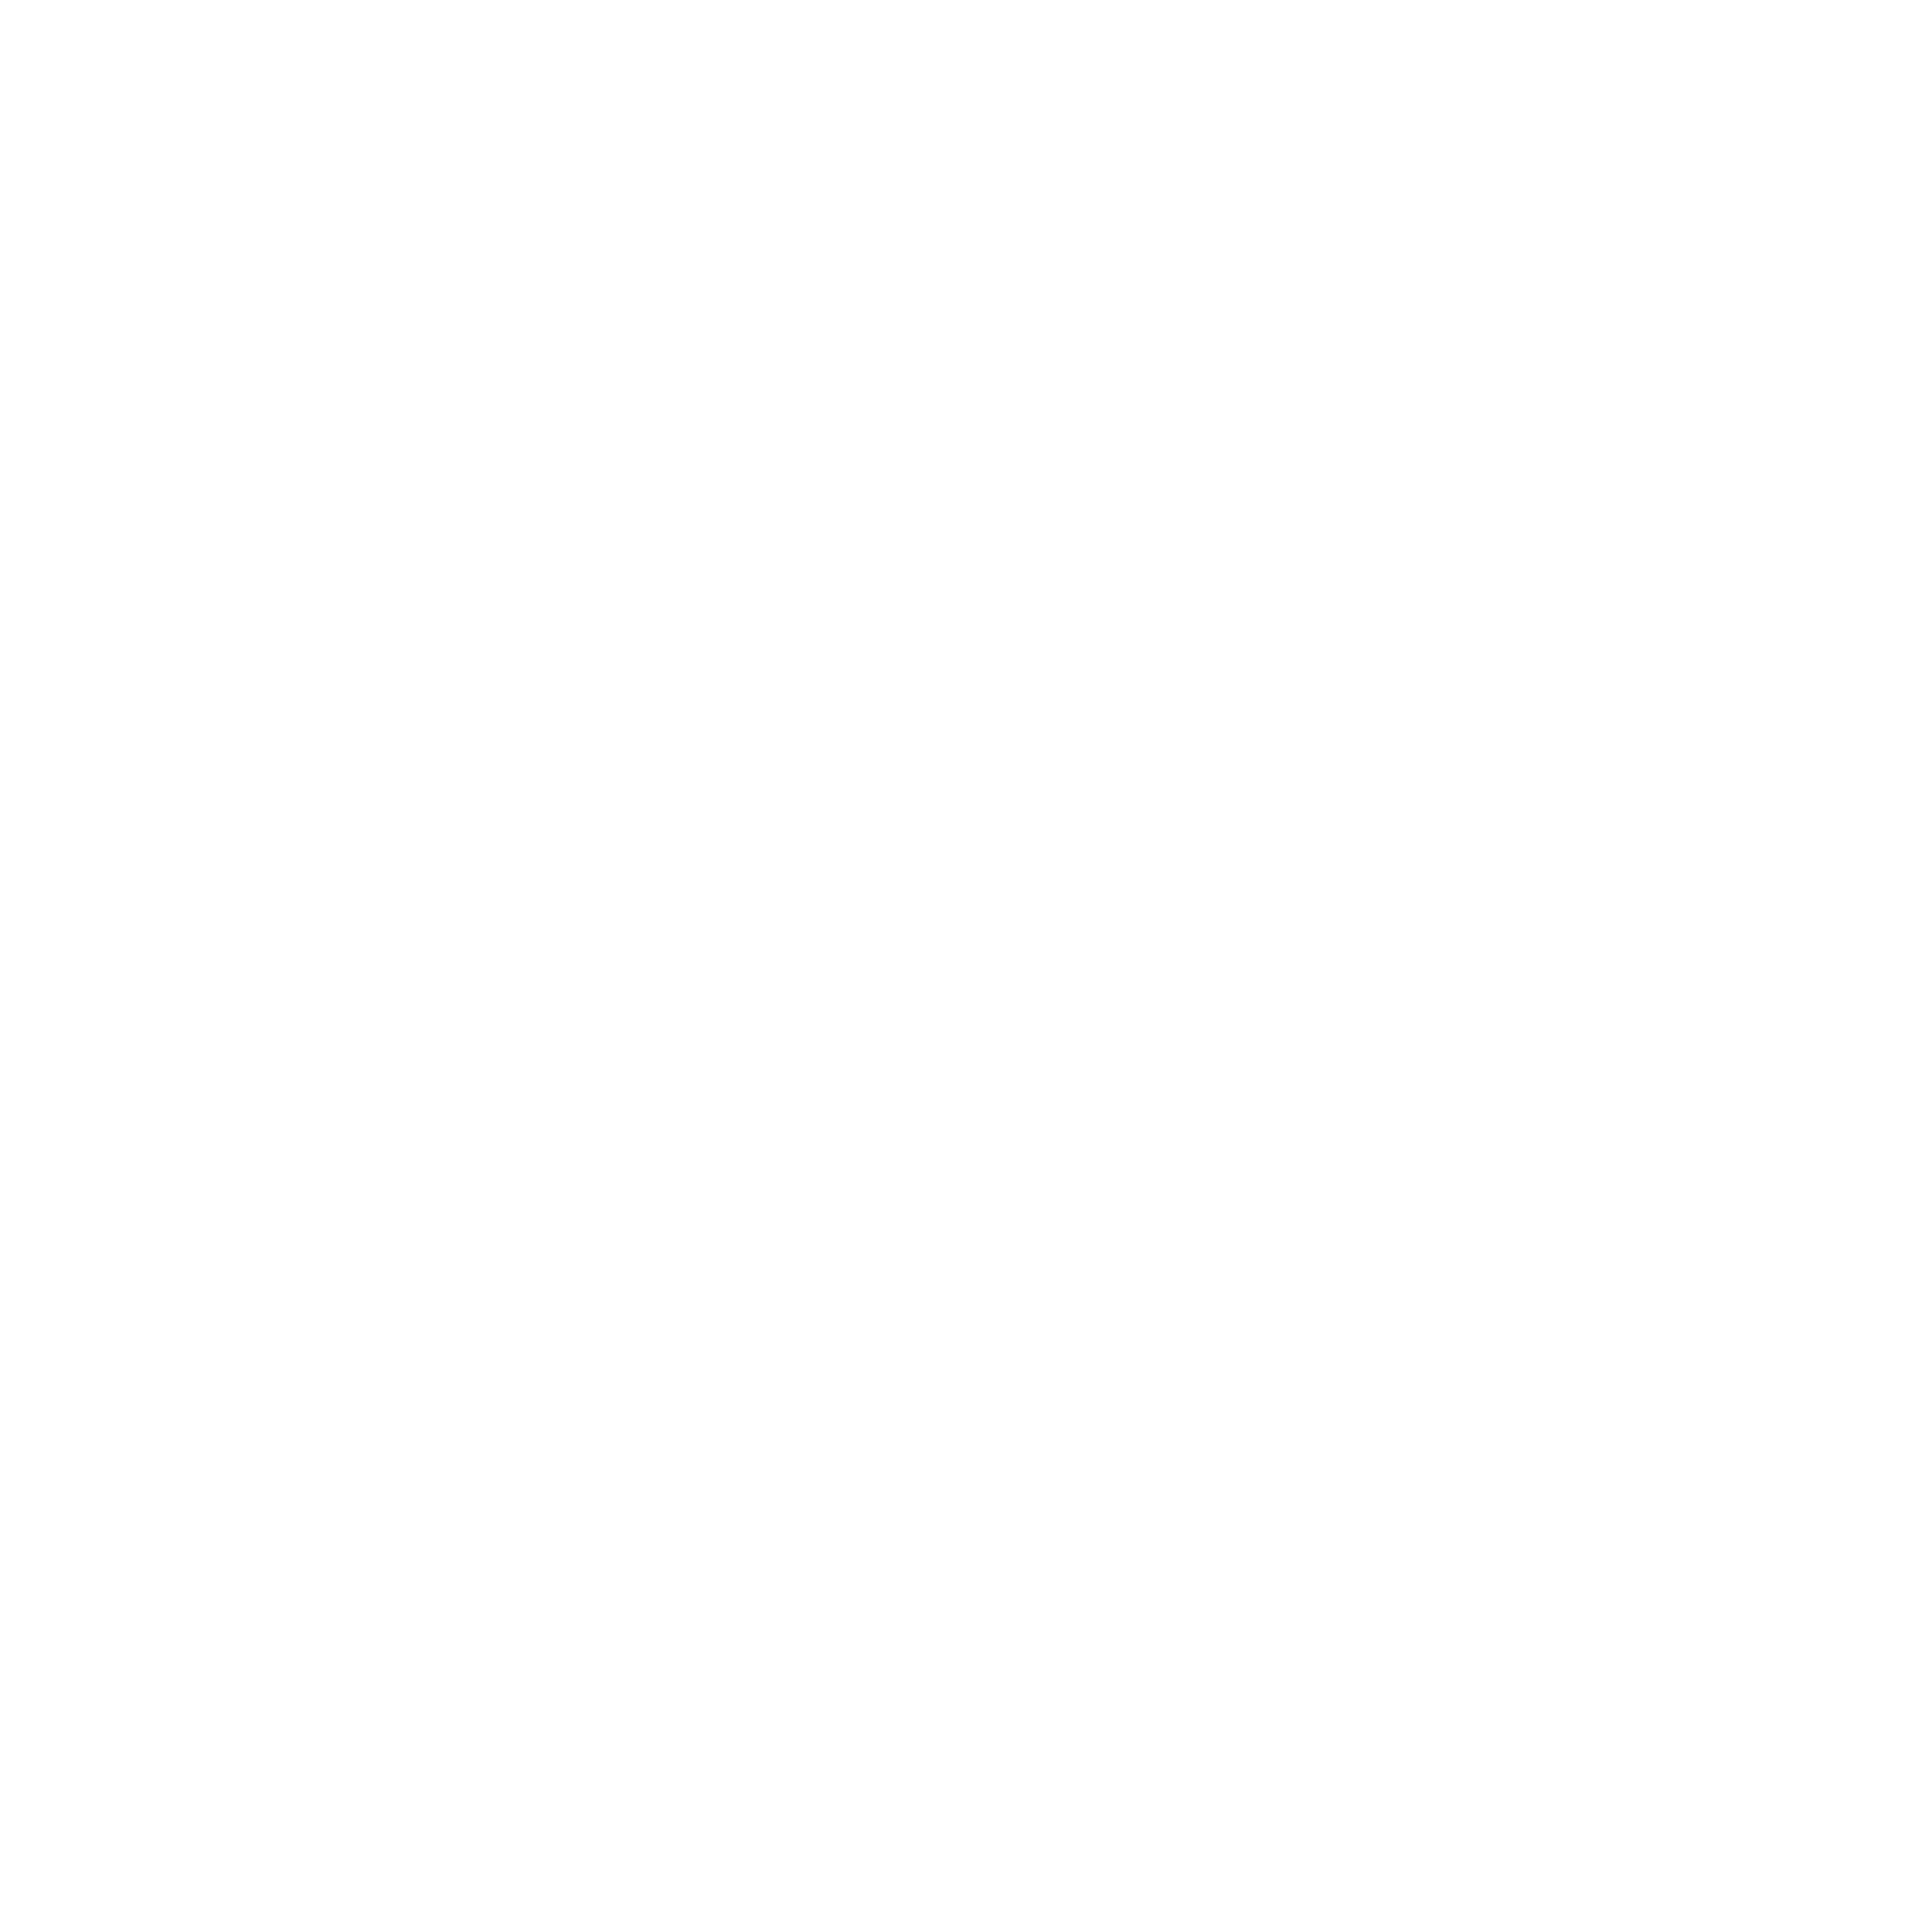 Quick SEO Solutions